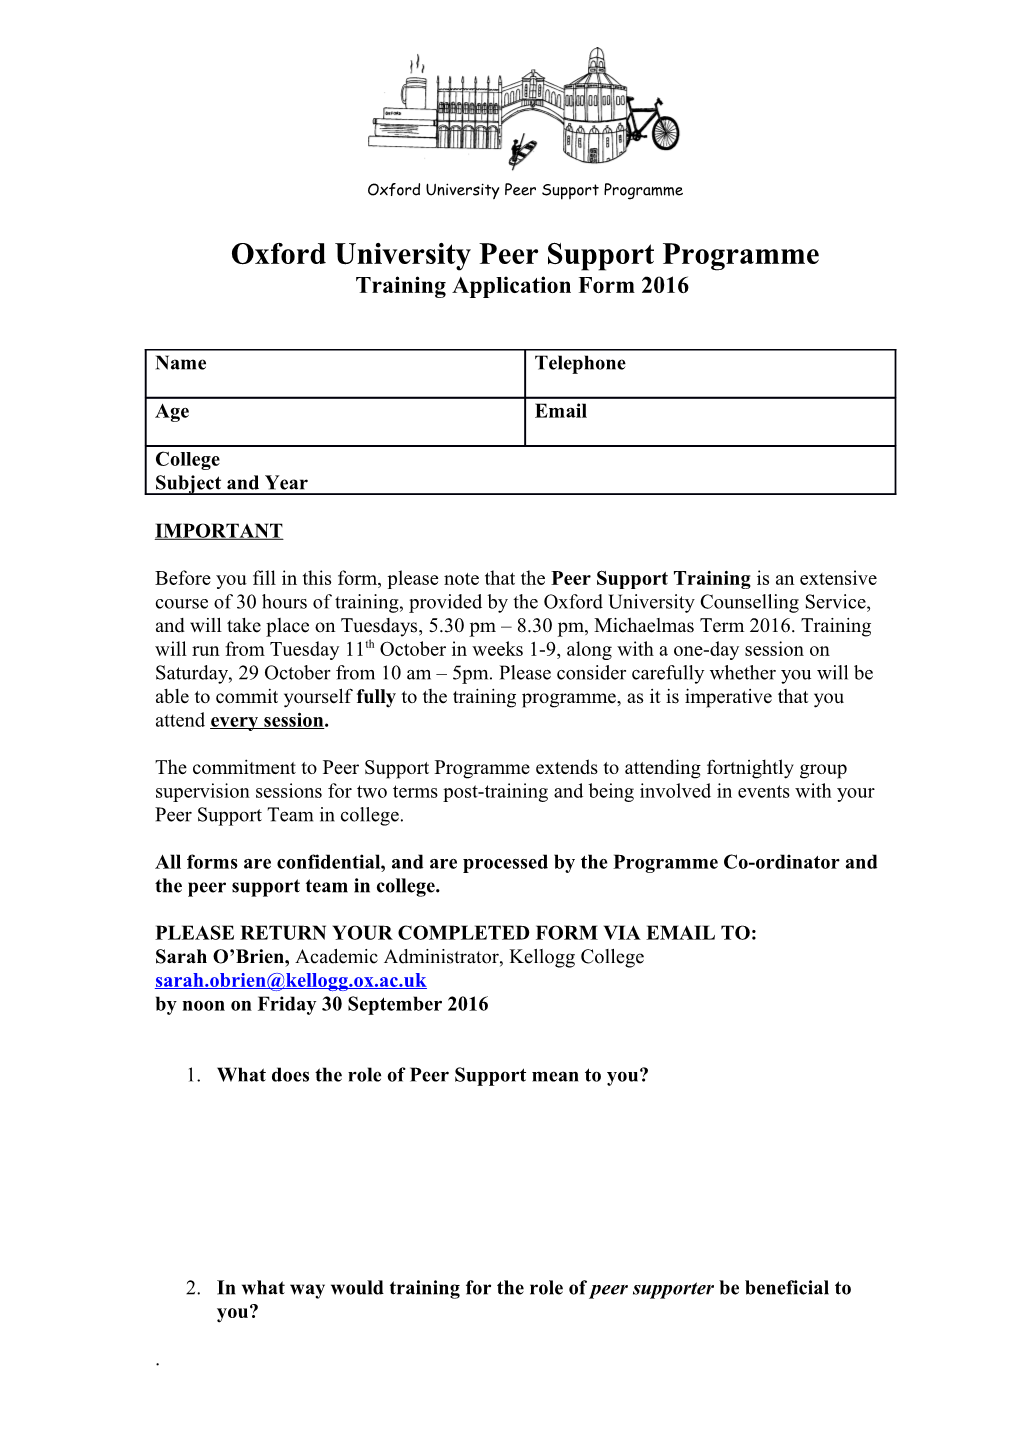 Oxford University Peer Support Programme